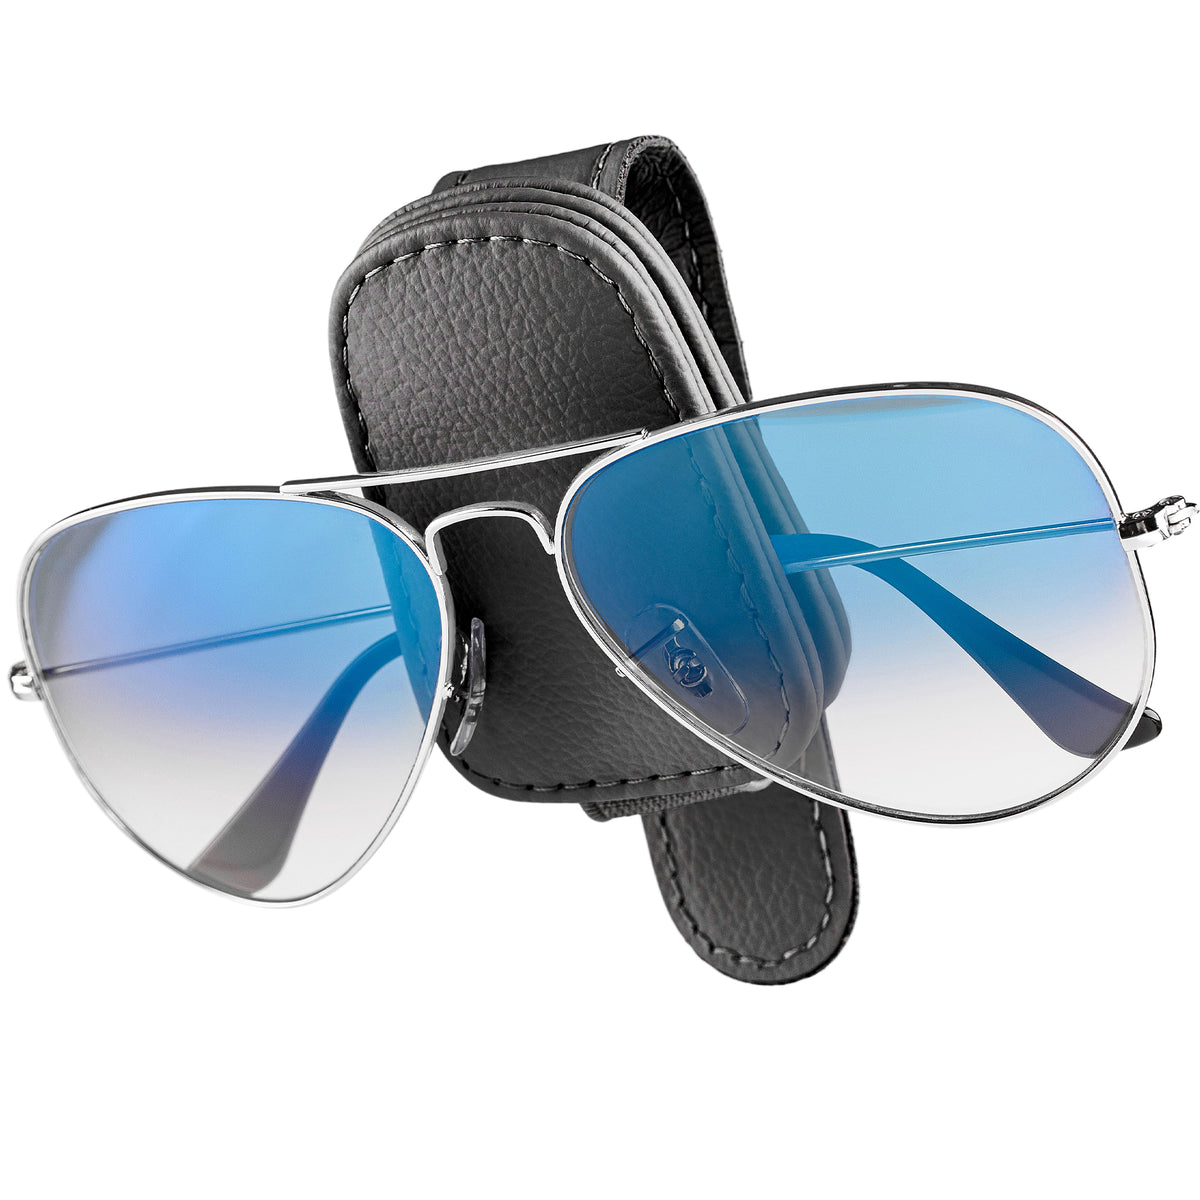 Car Sunglasses Magnetic Clip Holder